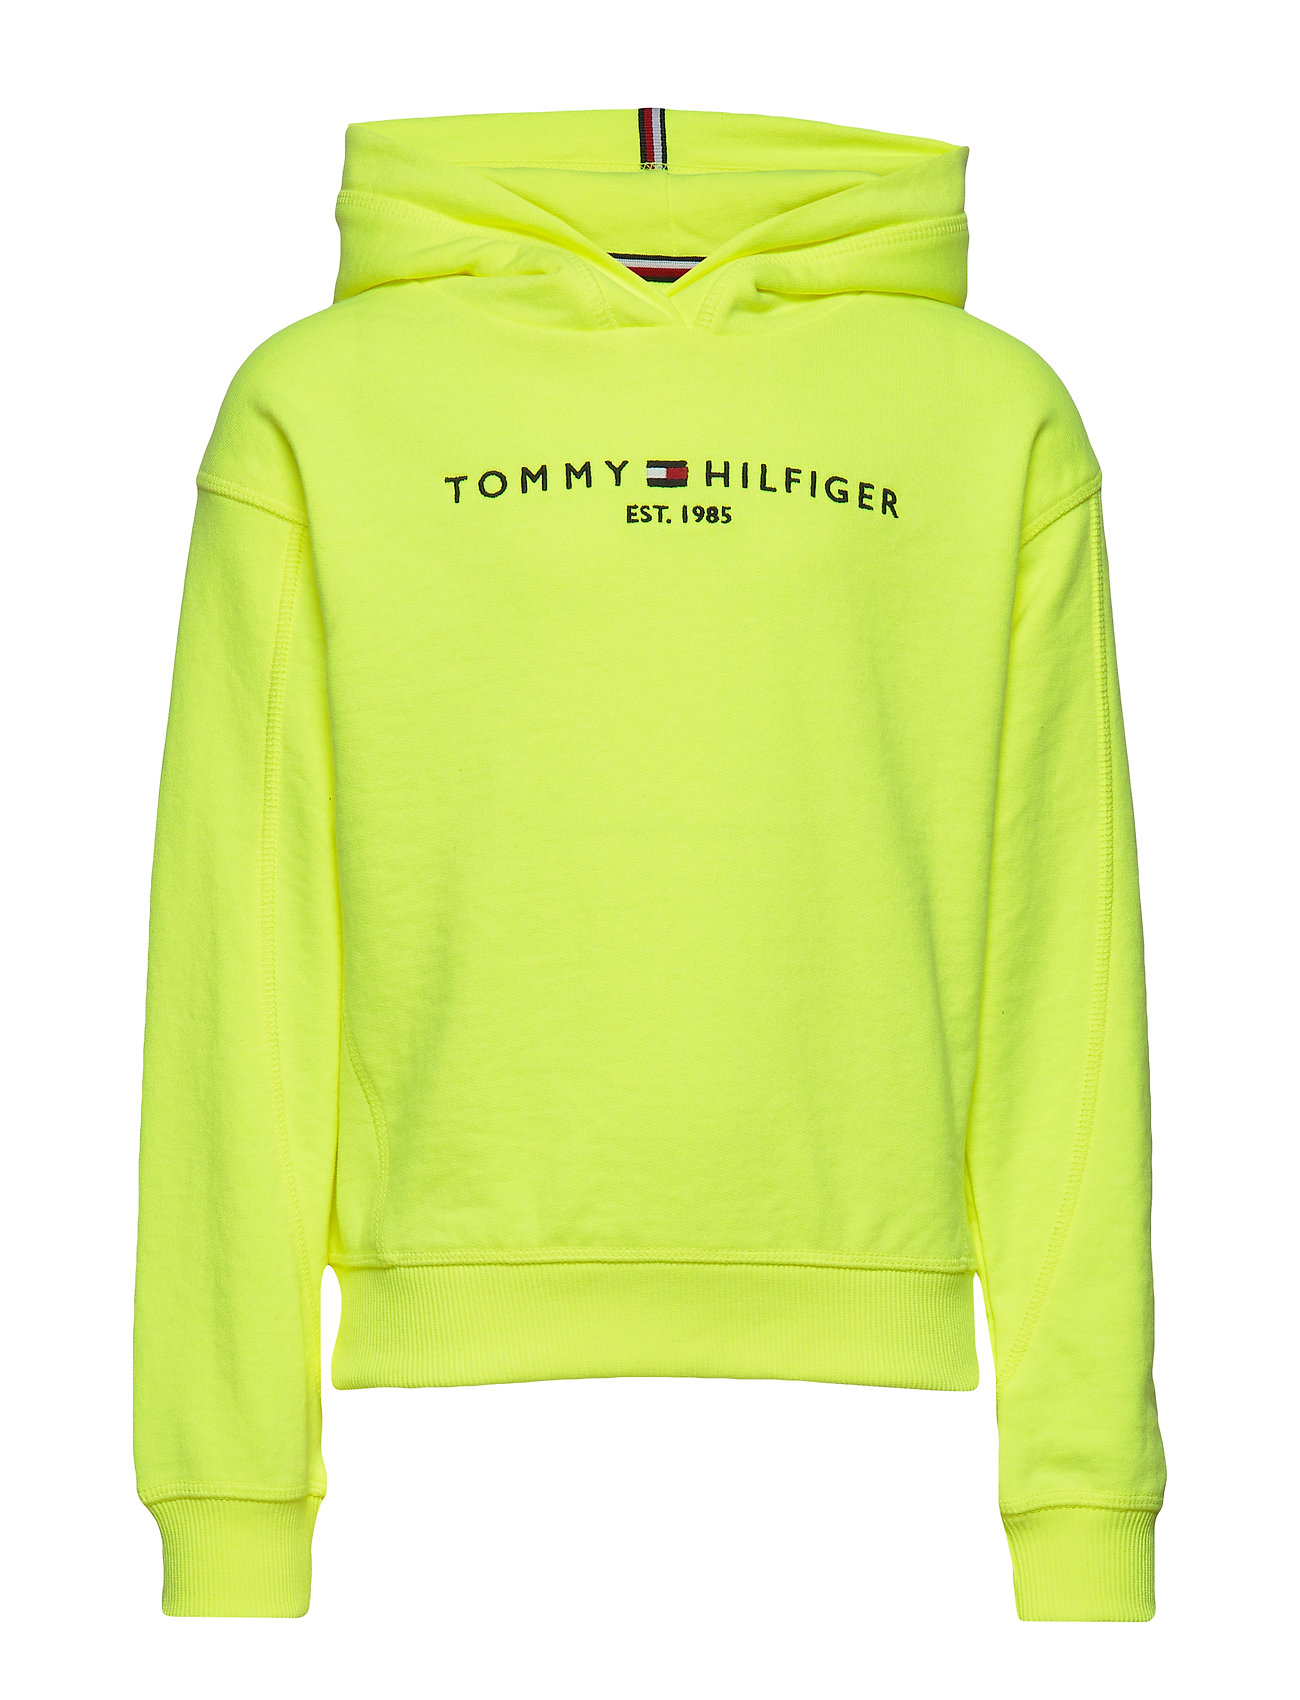 tommy hilfiger hoodie green